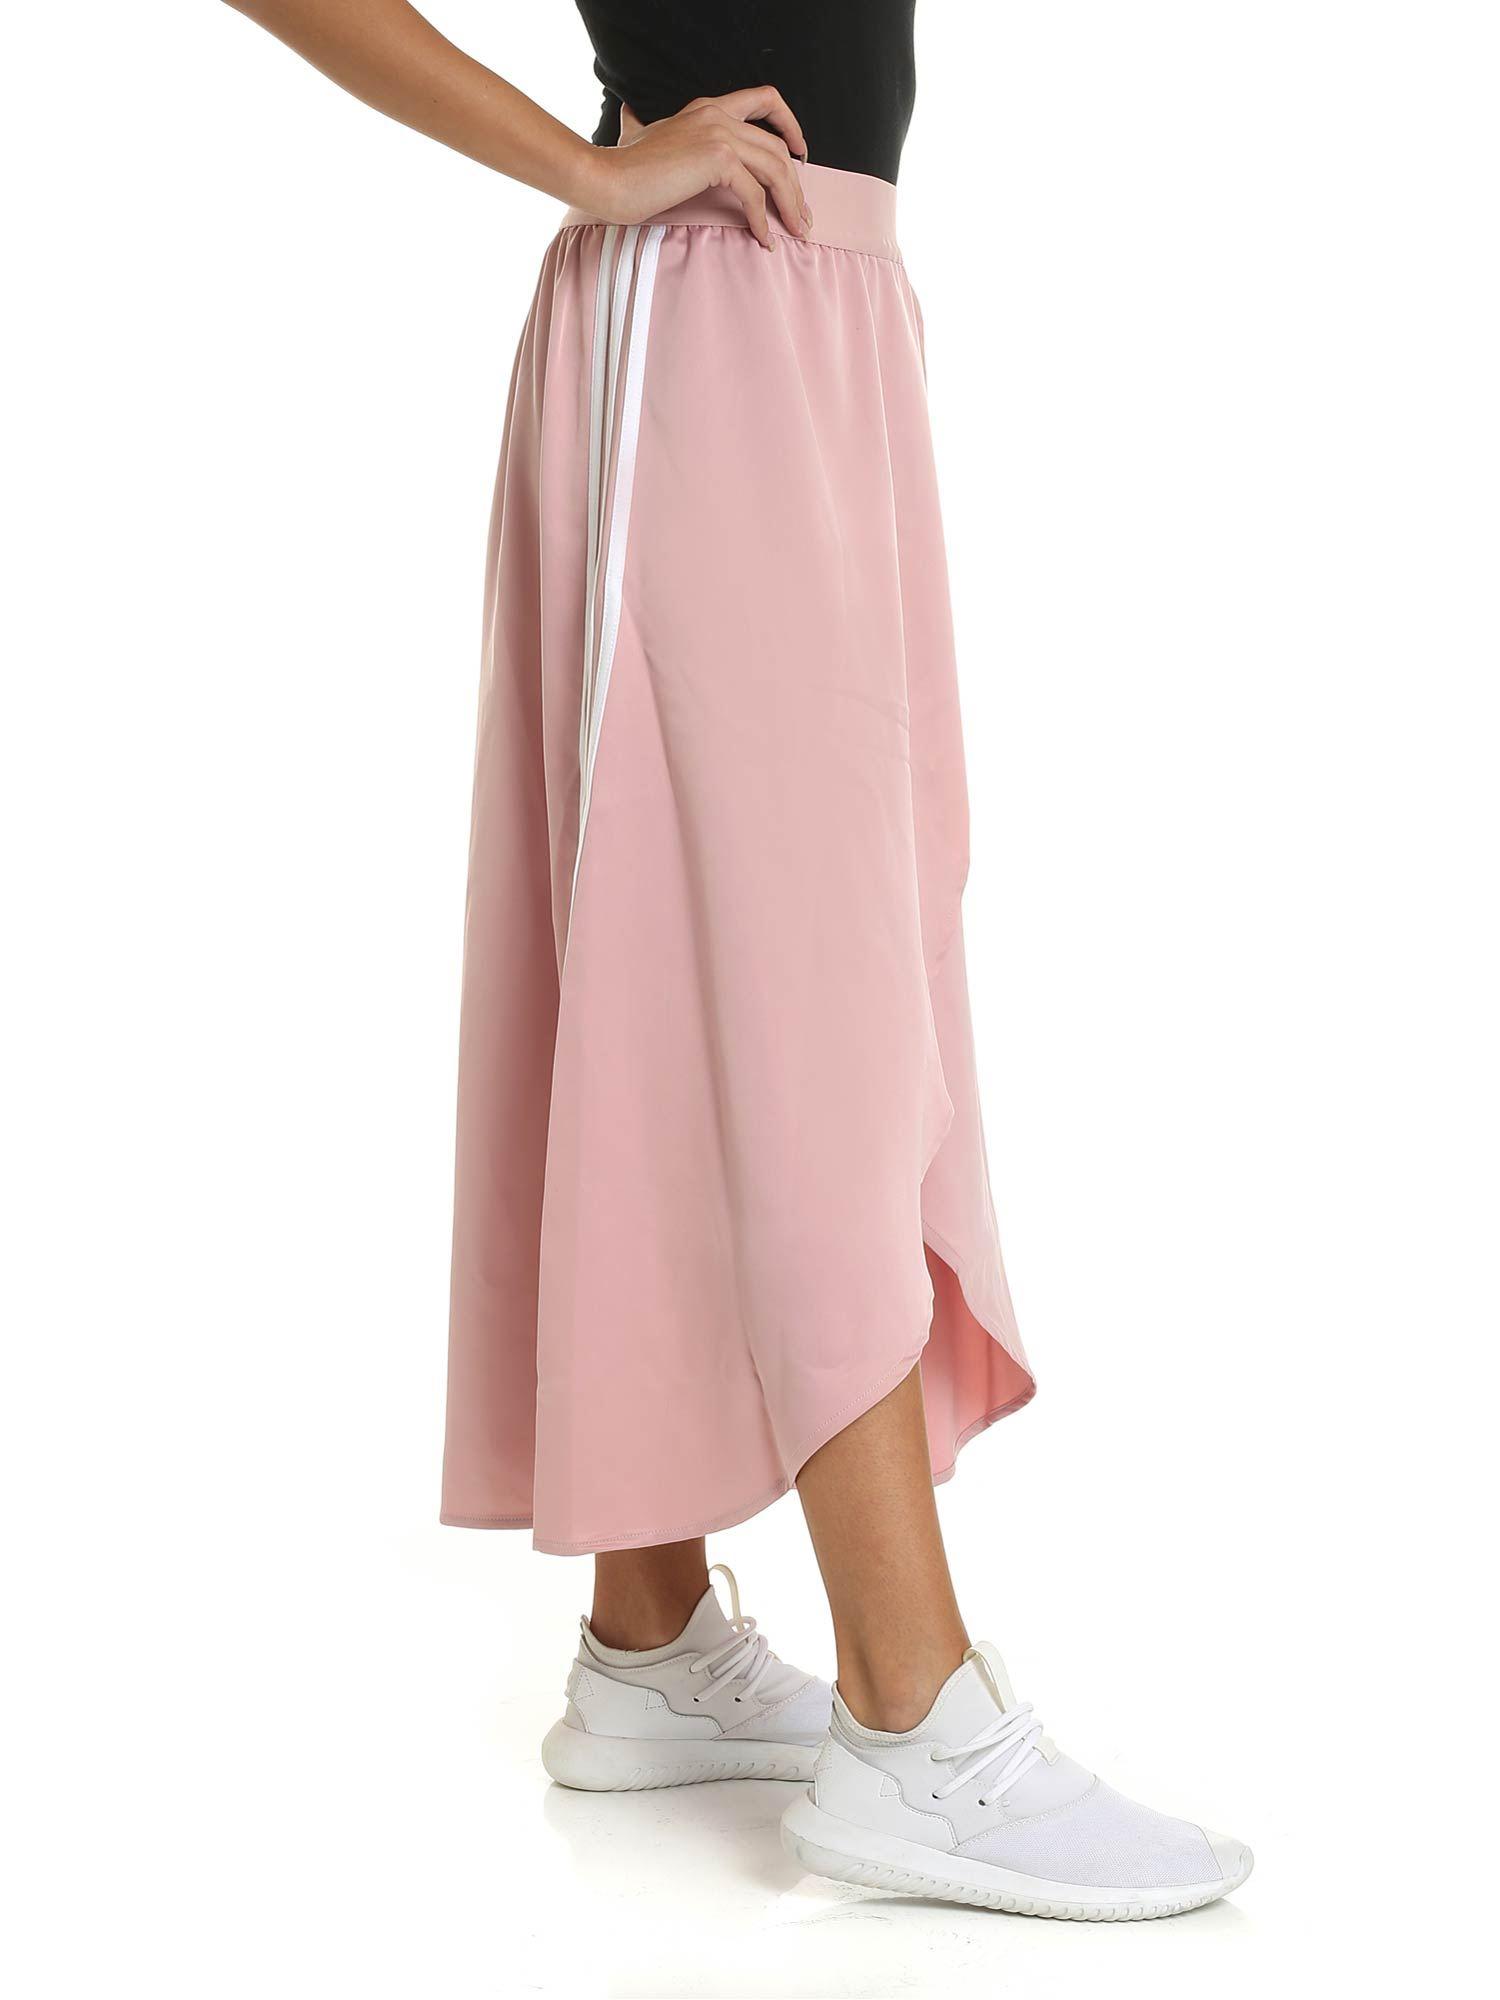 adidas skirt pink